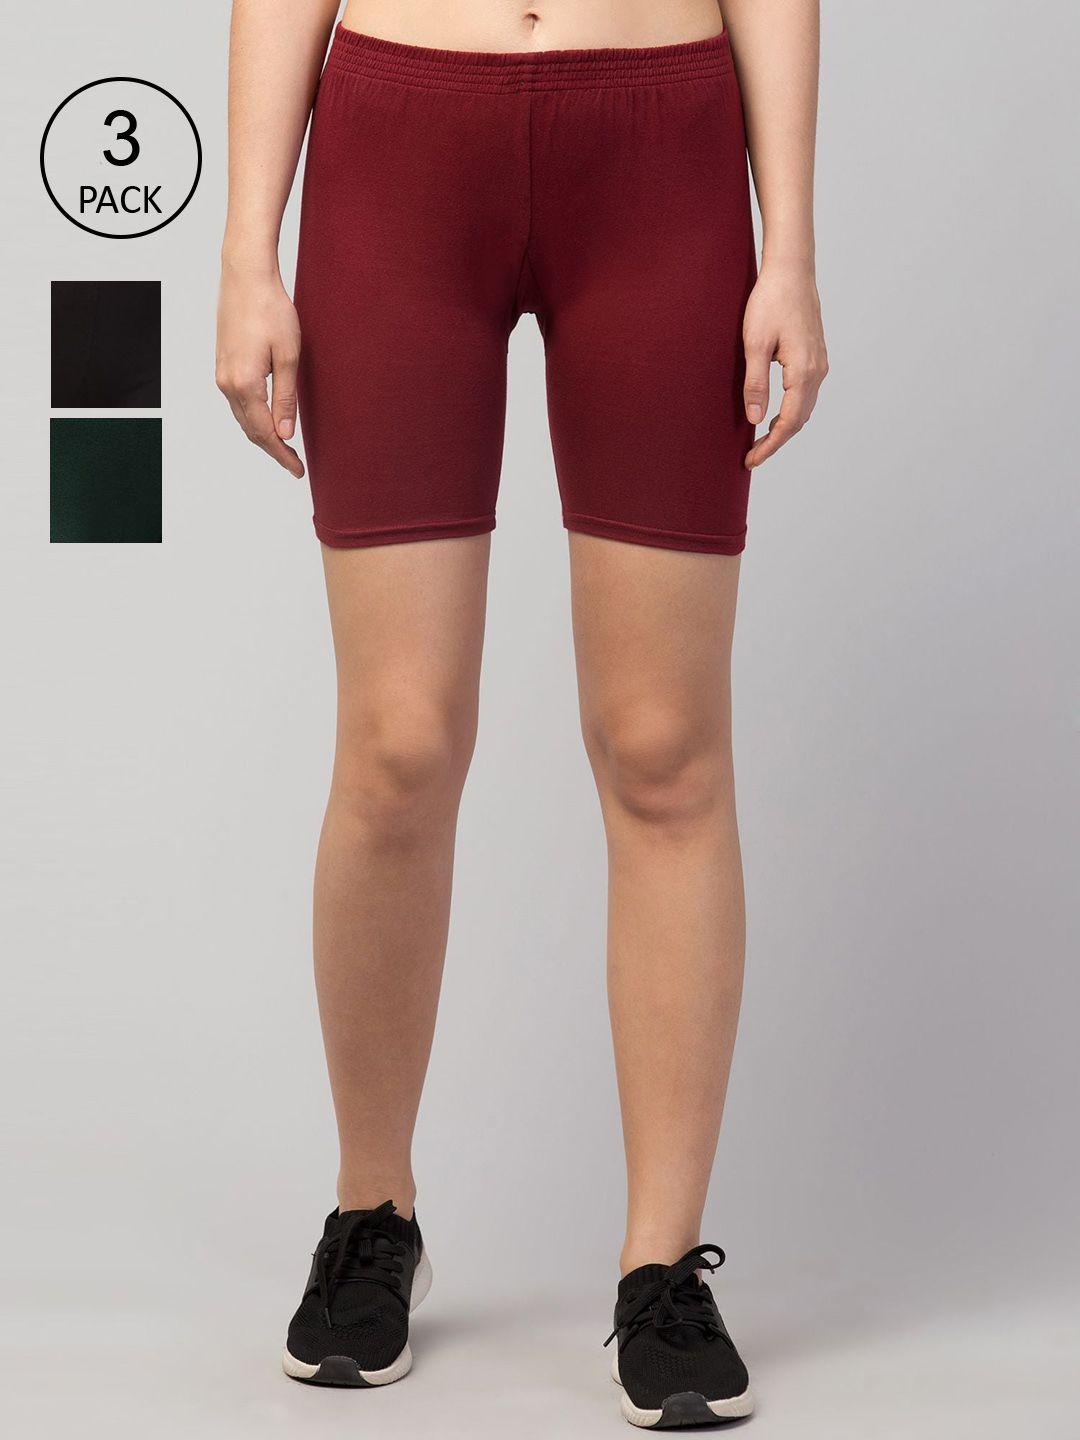 apraa-&-parma-women-maroon-&-black-set-of-3-slim-fit-pure-cotton-cycling-sports-shorts